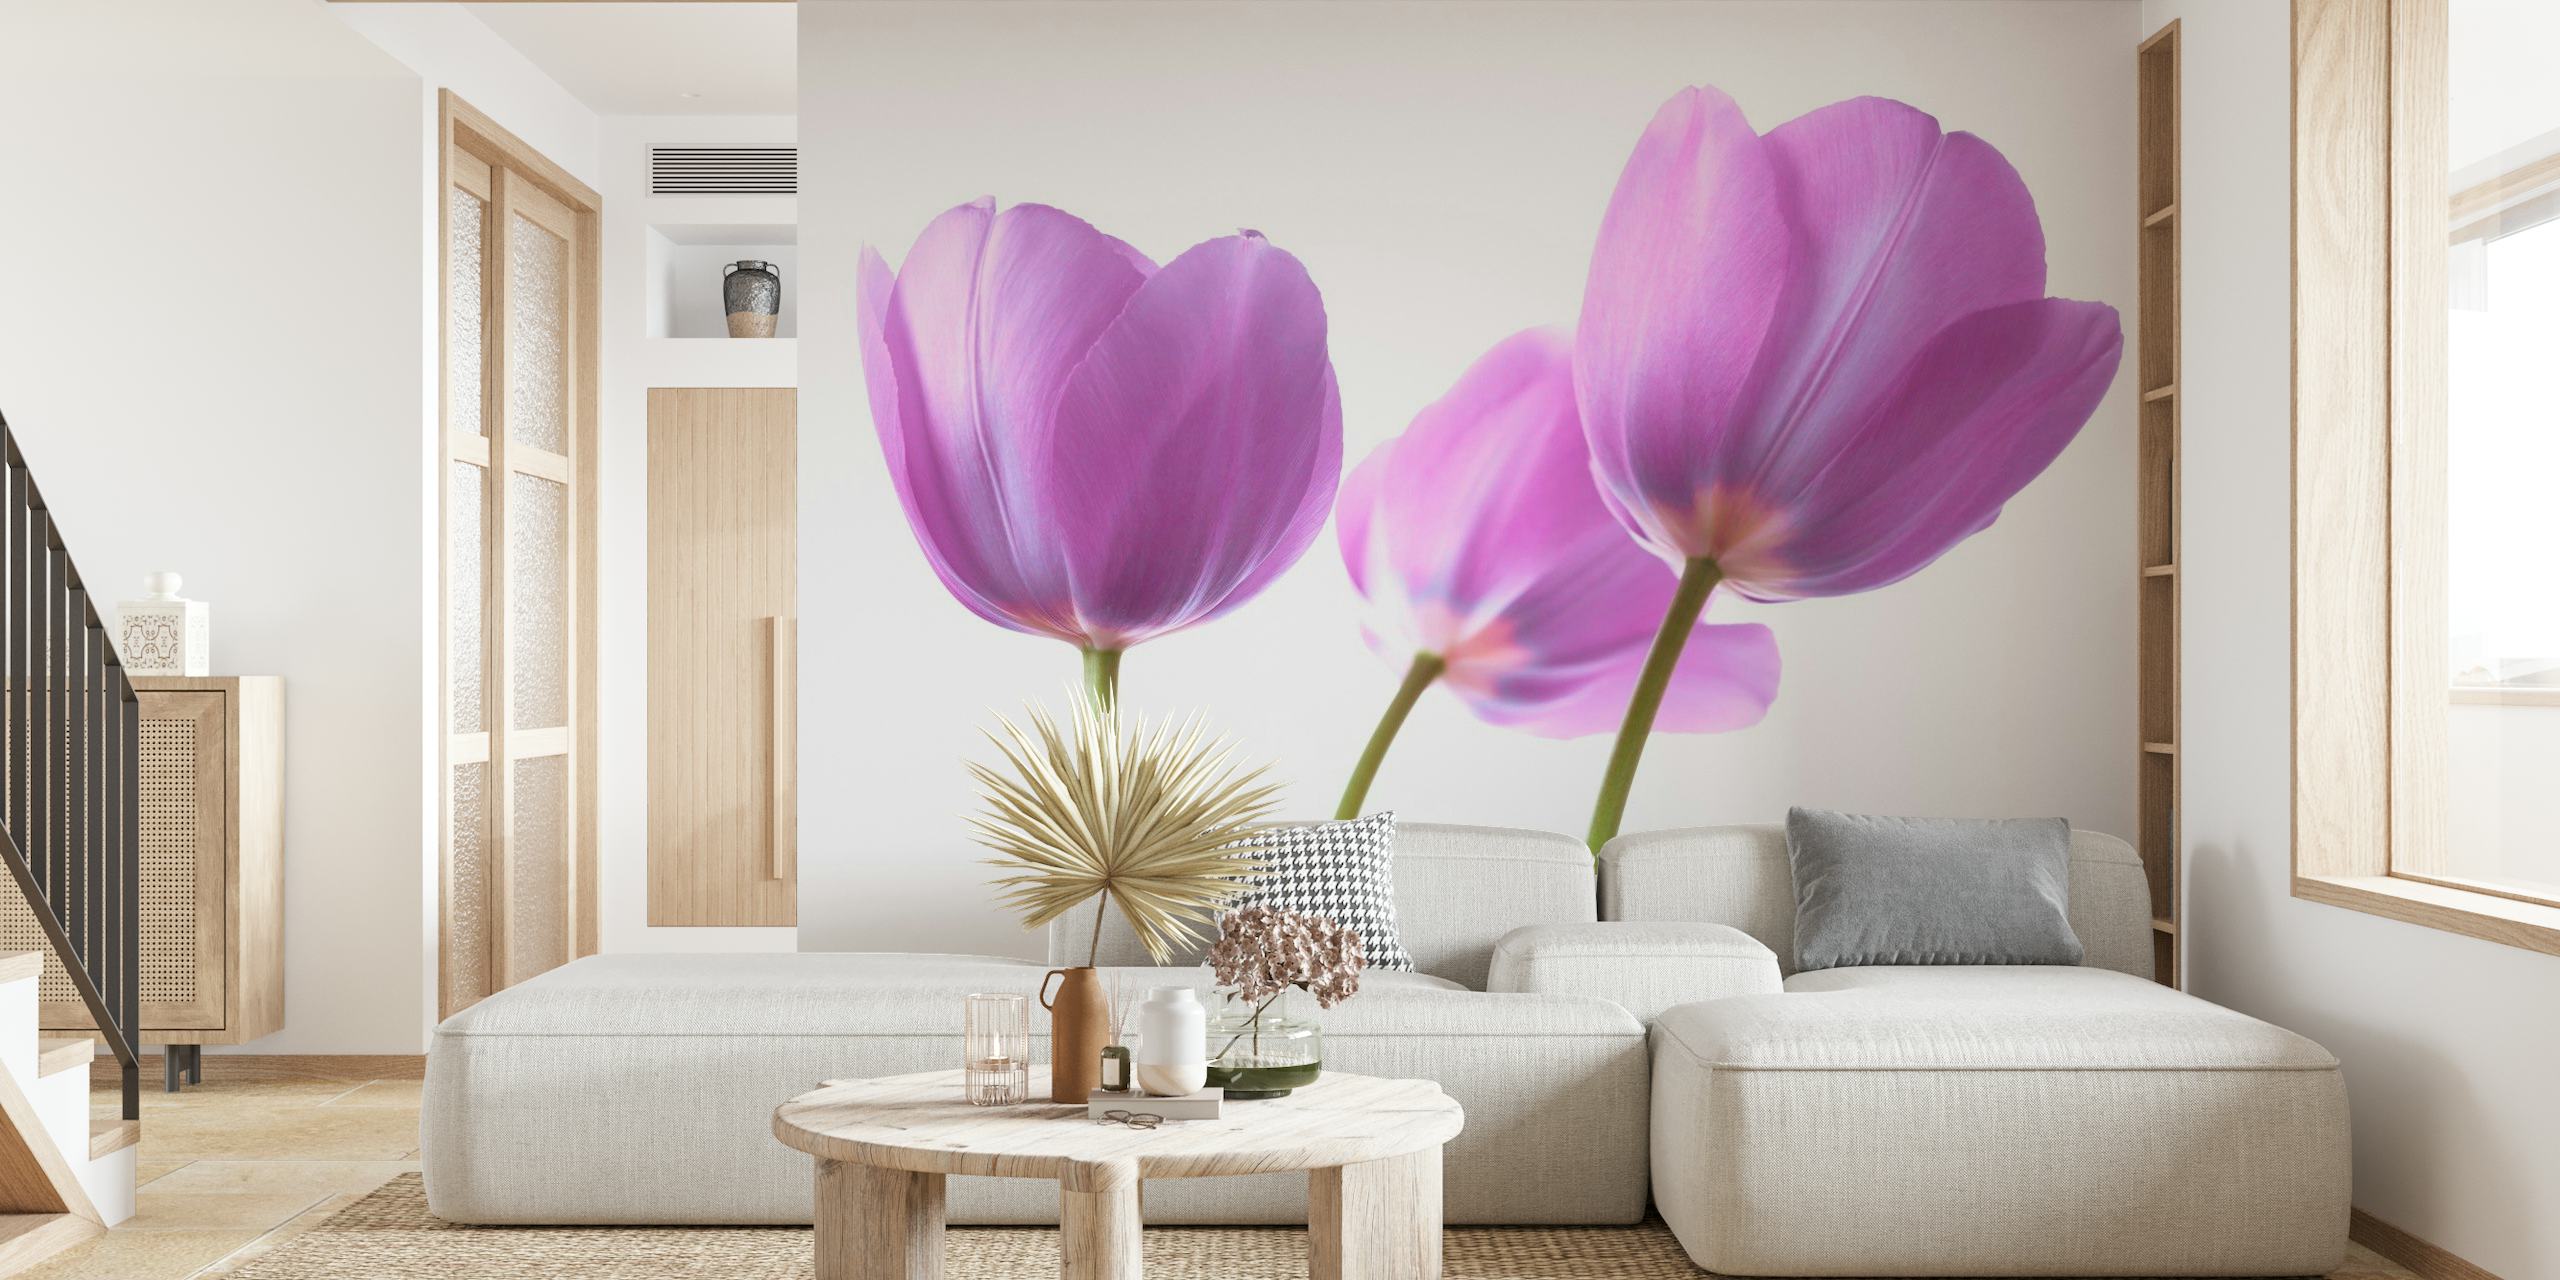 Et par lilla tulipaner vægmaleri på hvid baggrund